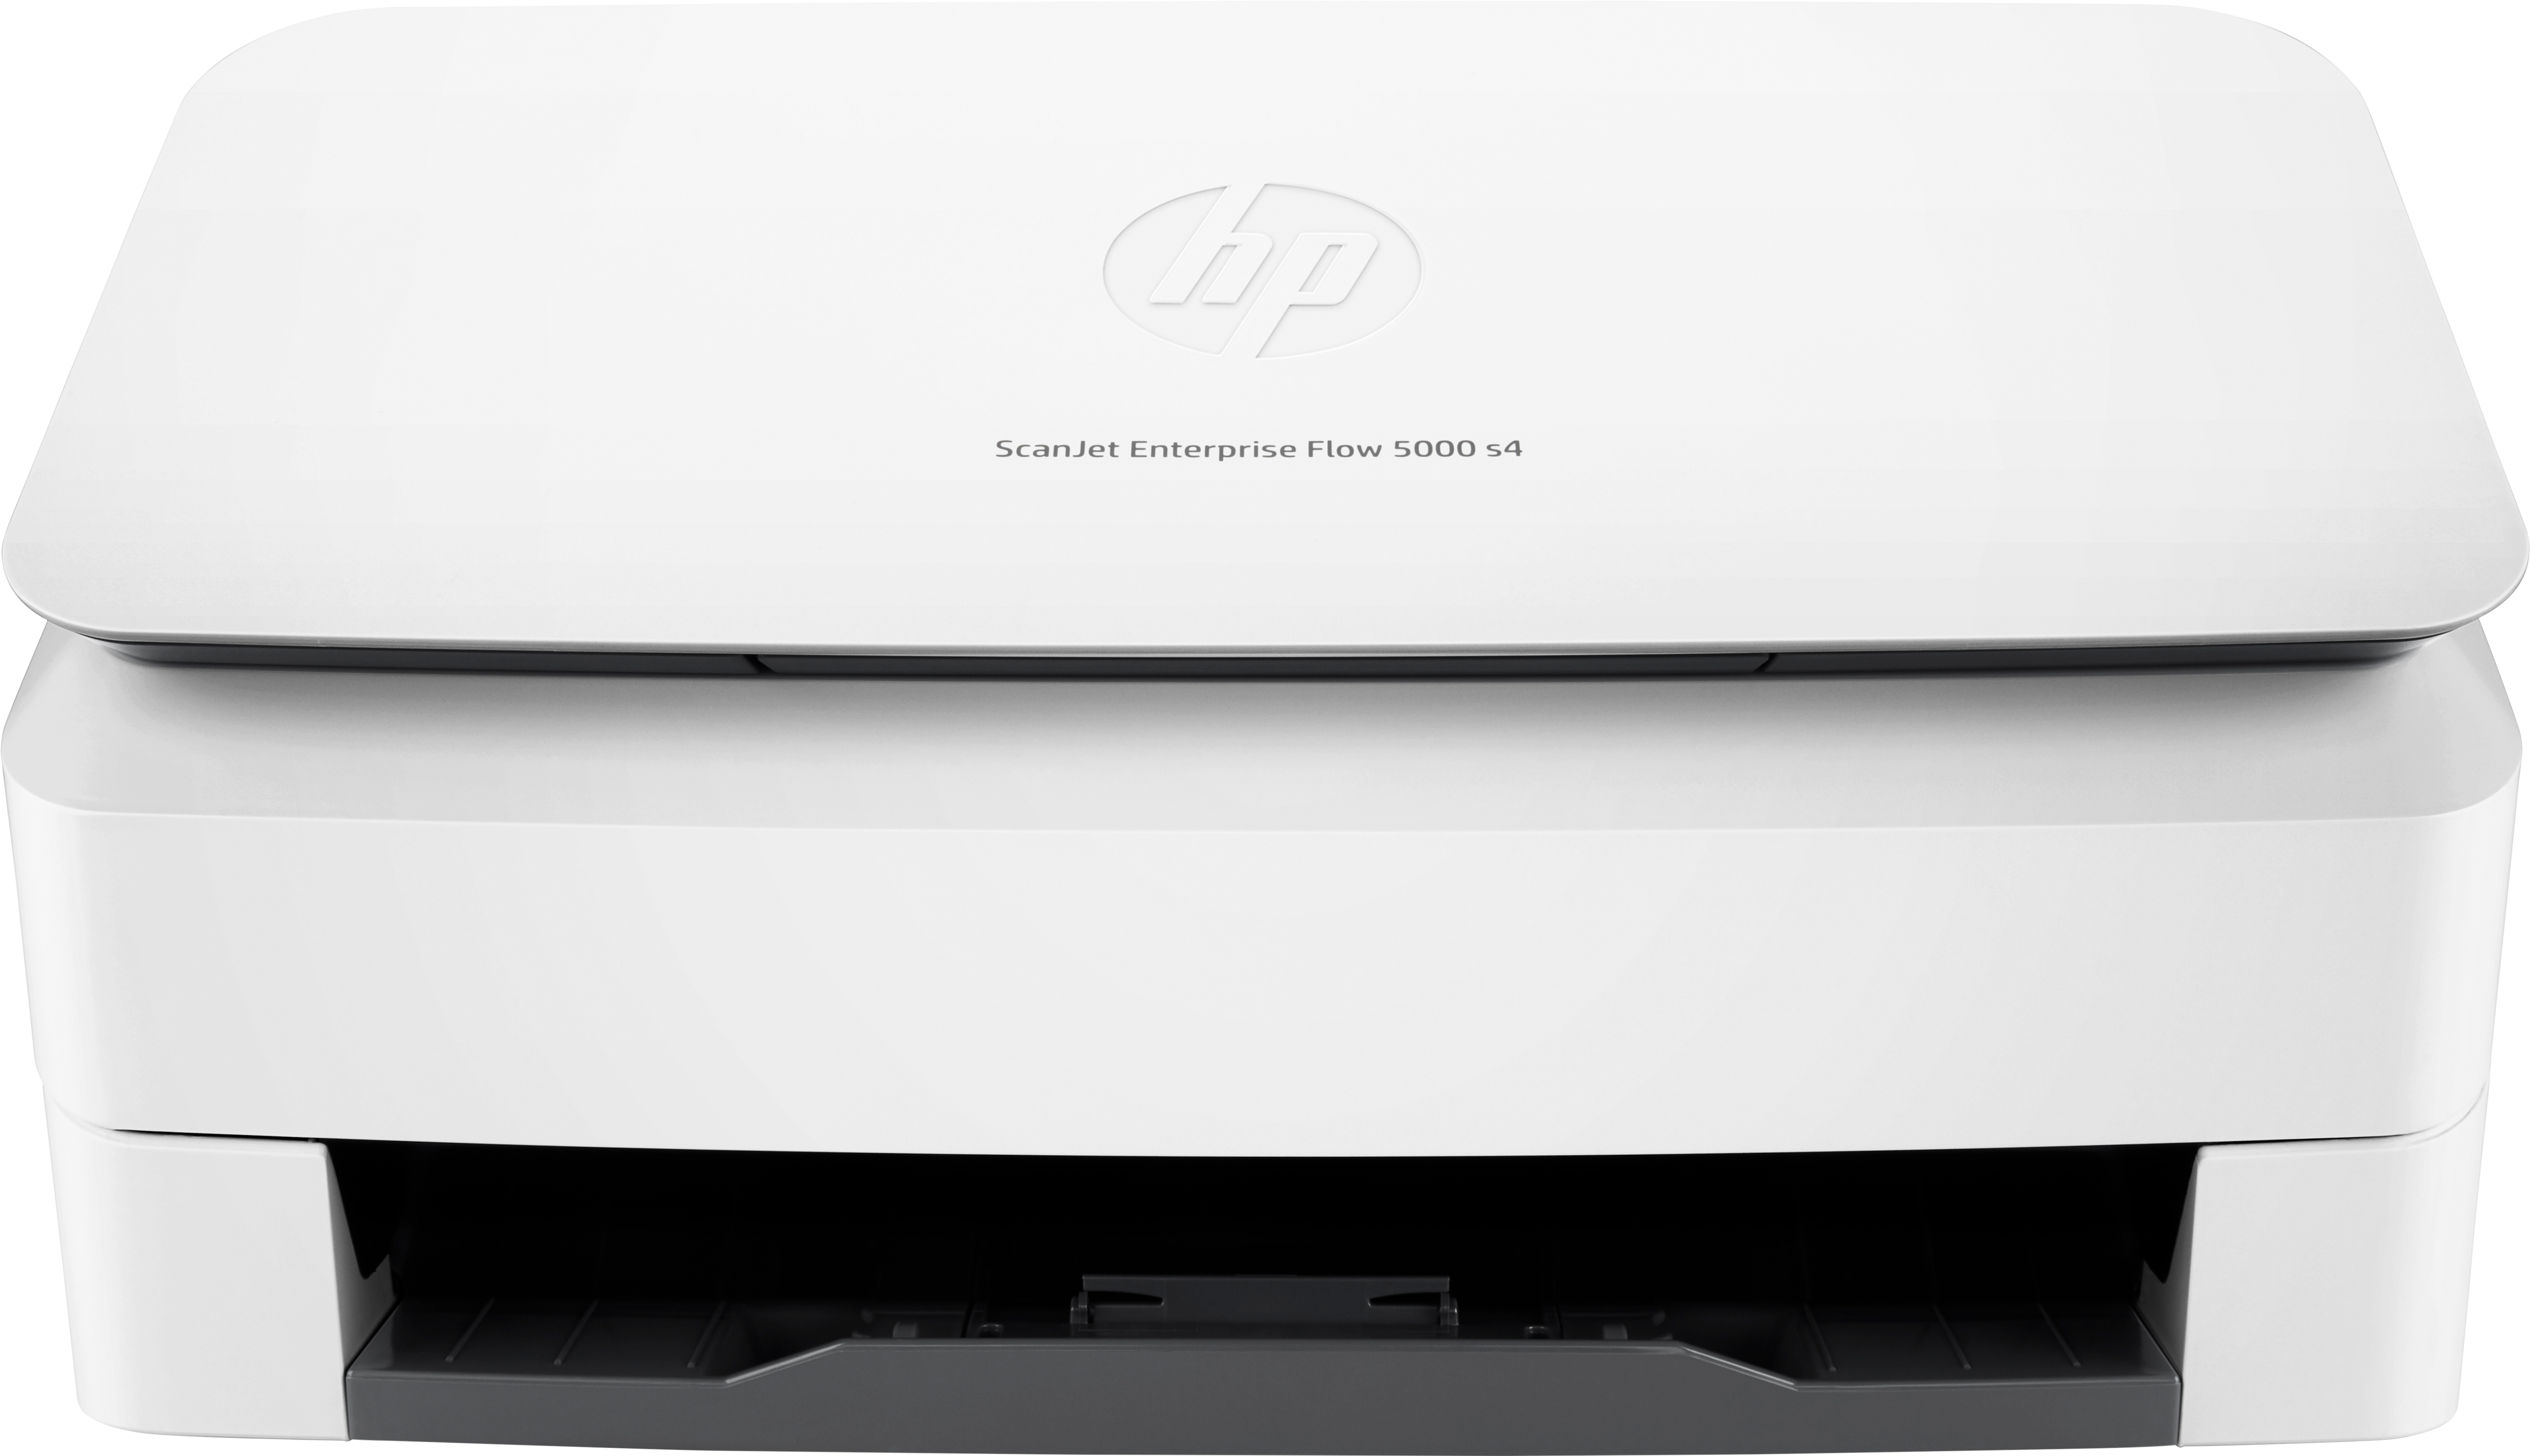 HP ScanJet Enterprise Flow 5000 s4 Sheet-feed Scanner - Dokumentenscanner - Contact Image Sensor (CIS)